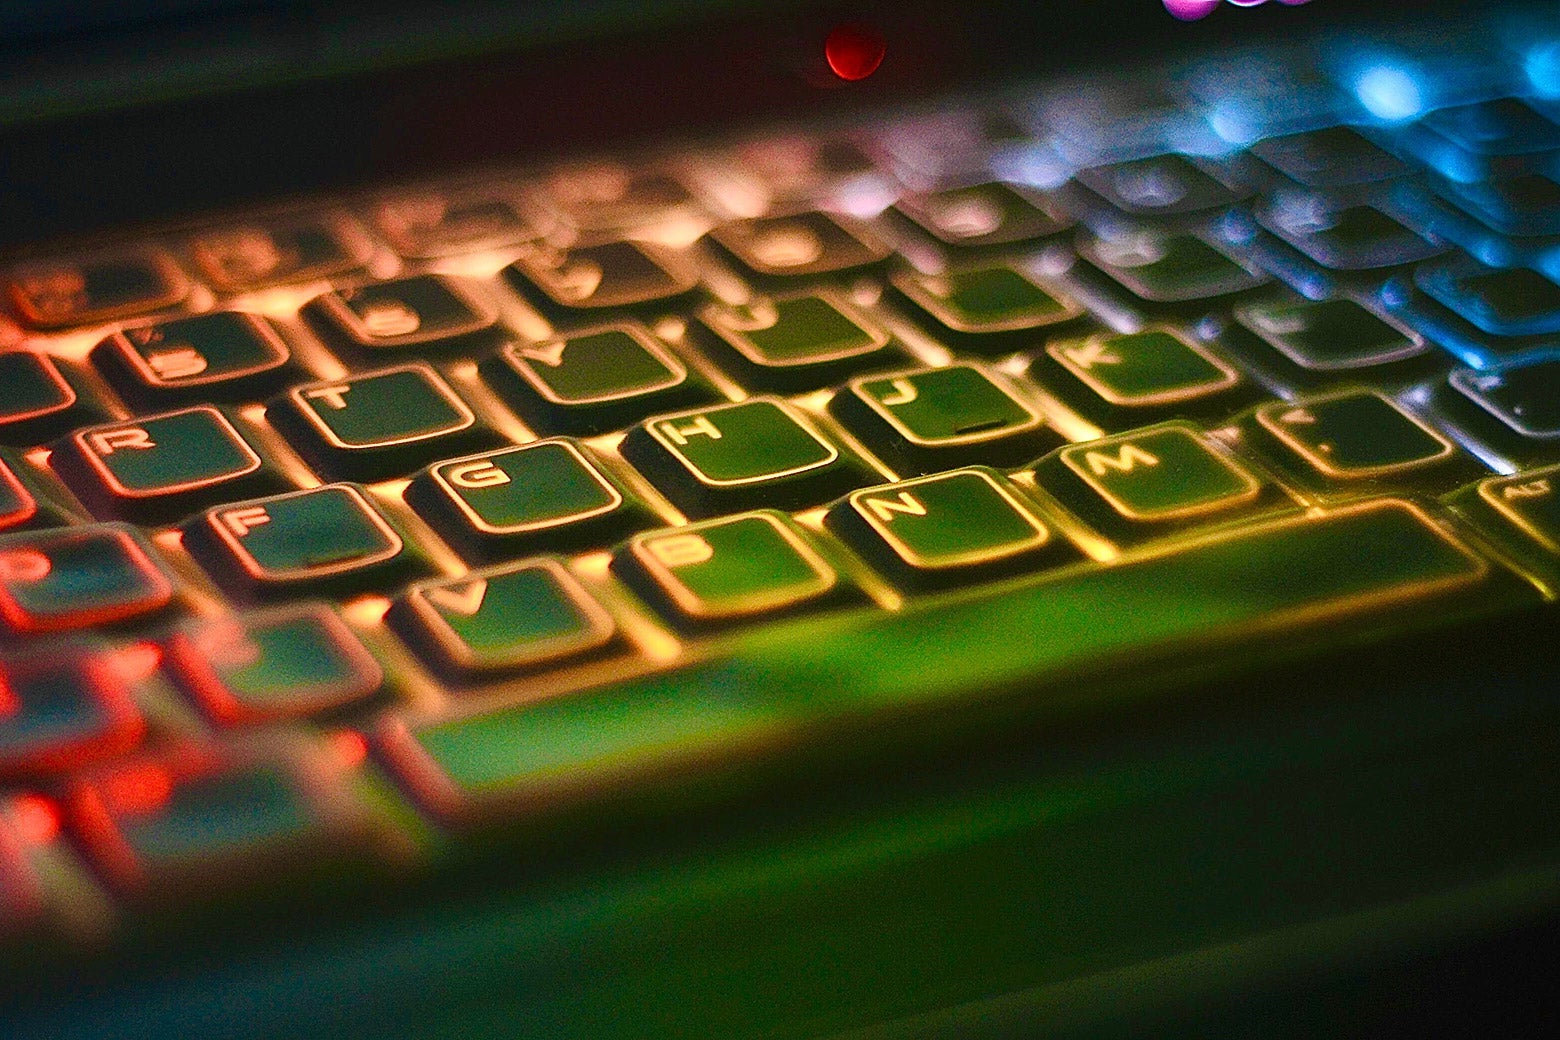 A glowing keyboard